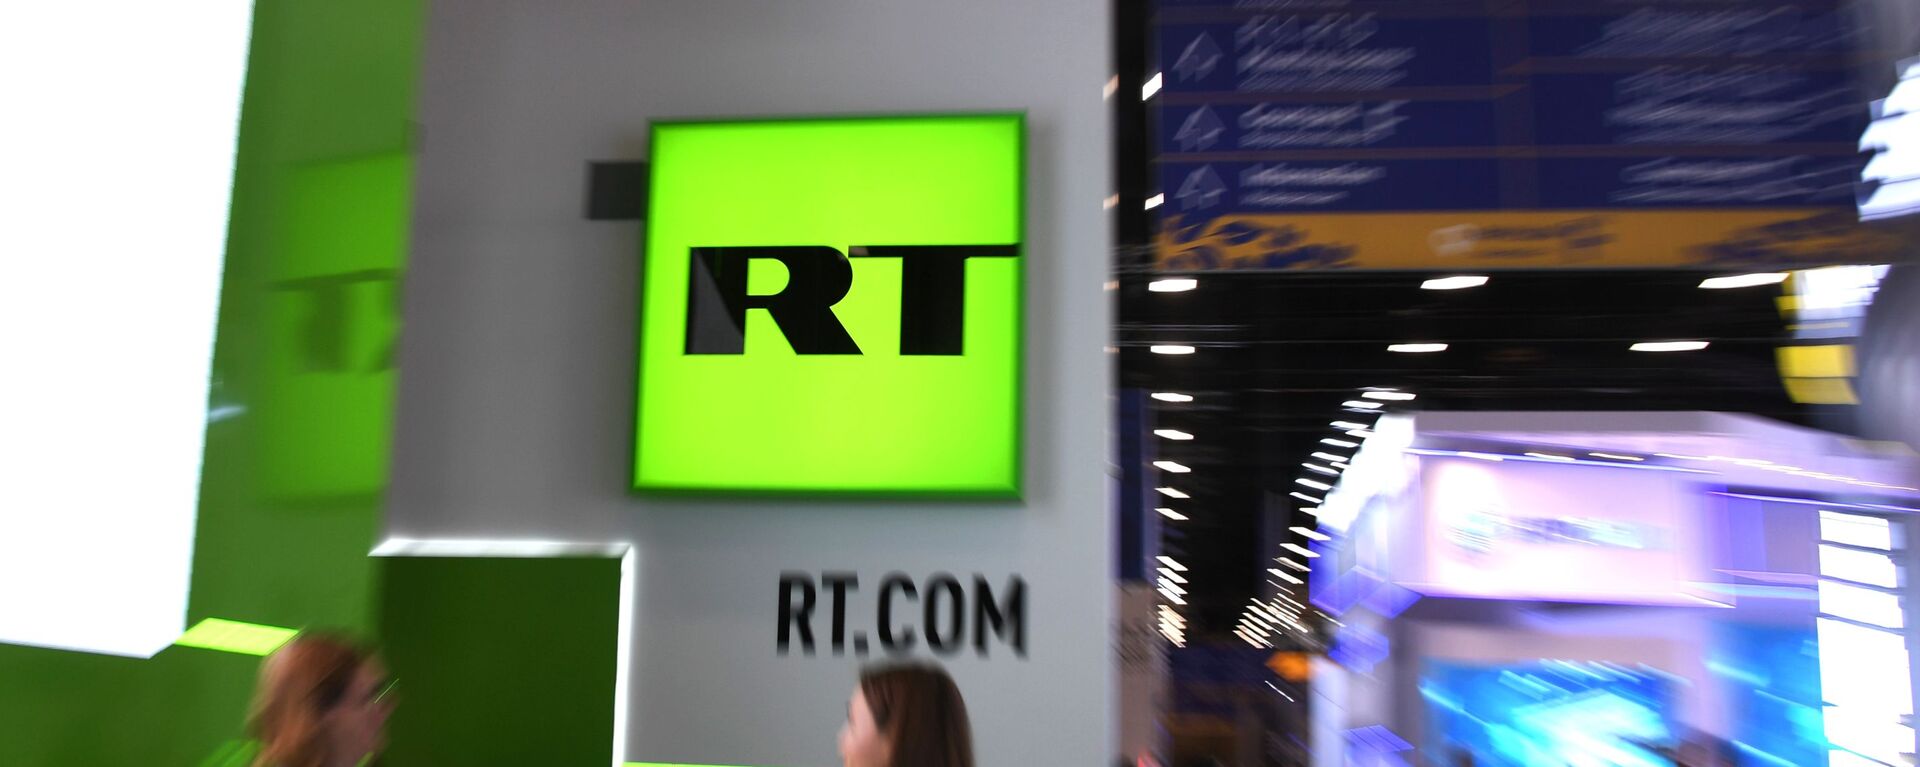 Логотип телеканала RT (Russia Today), архивное фото - Sputnik Lietuva, 1920, 29.09.2021